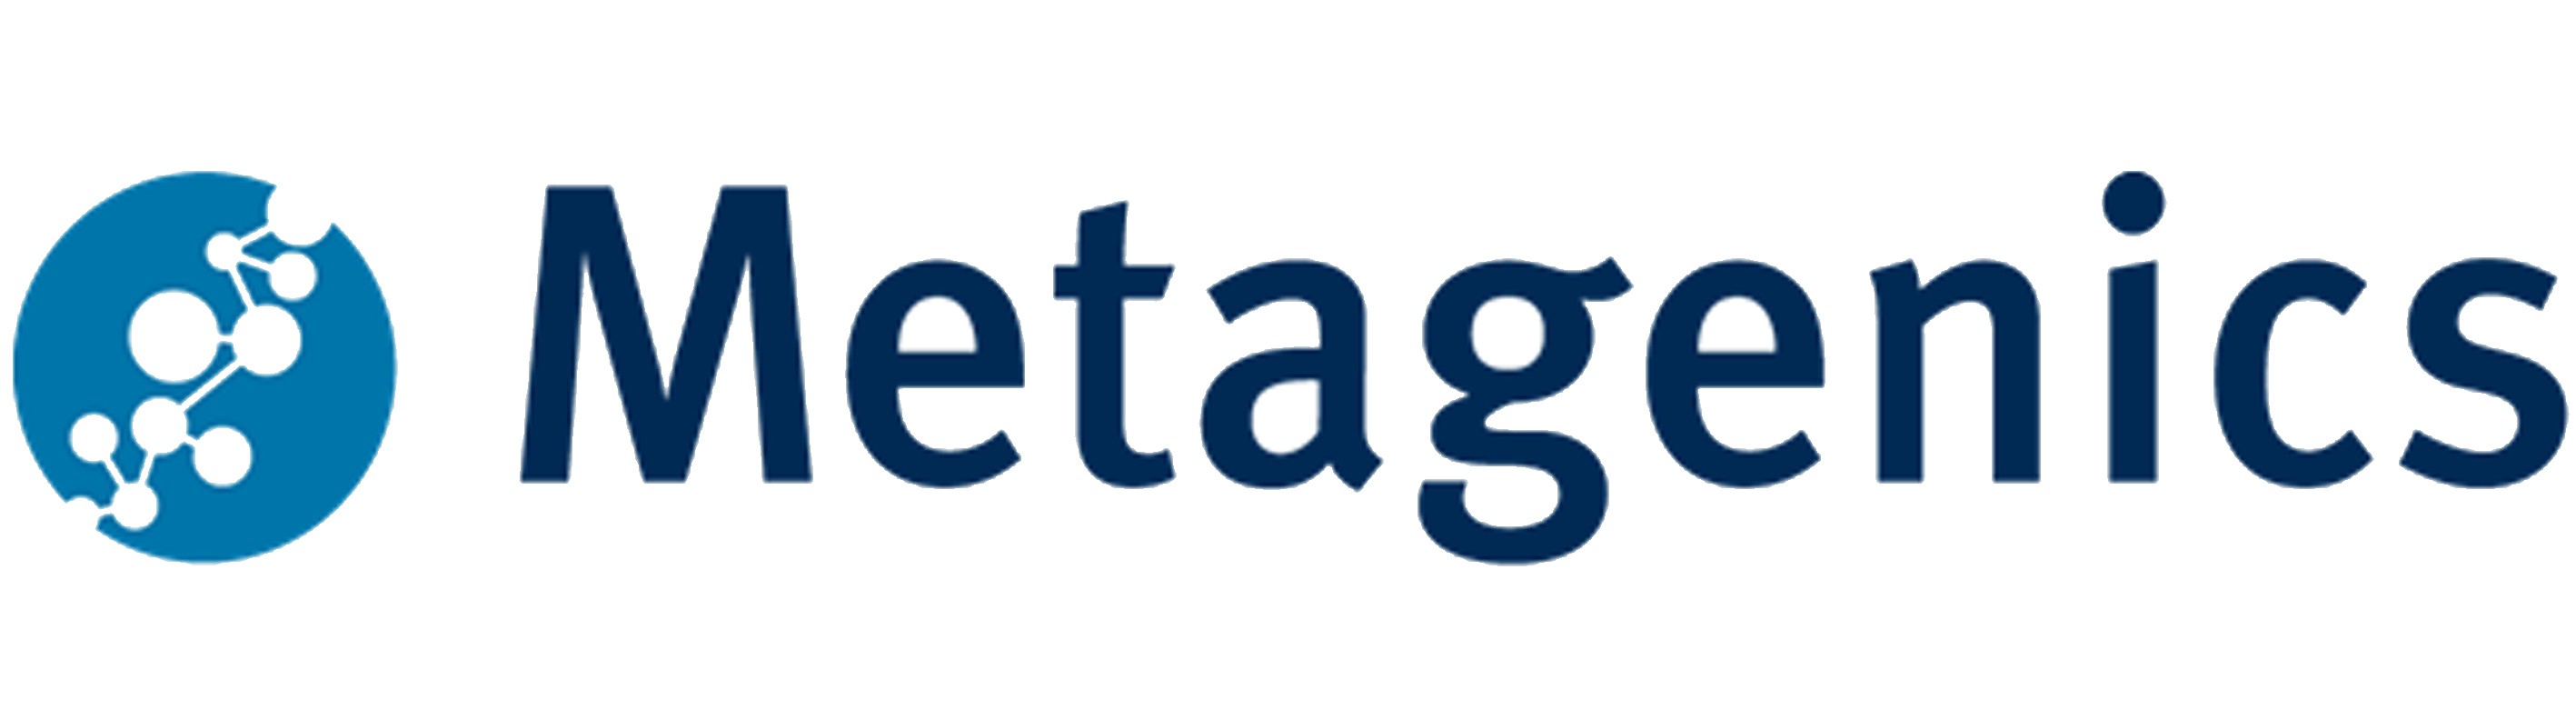 Metagenics-logo